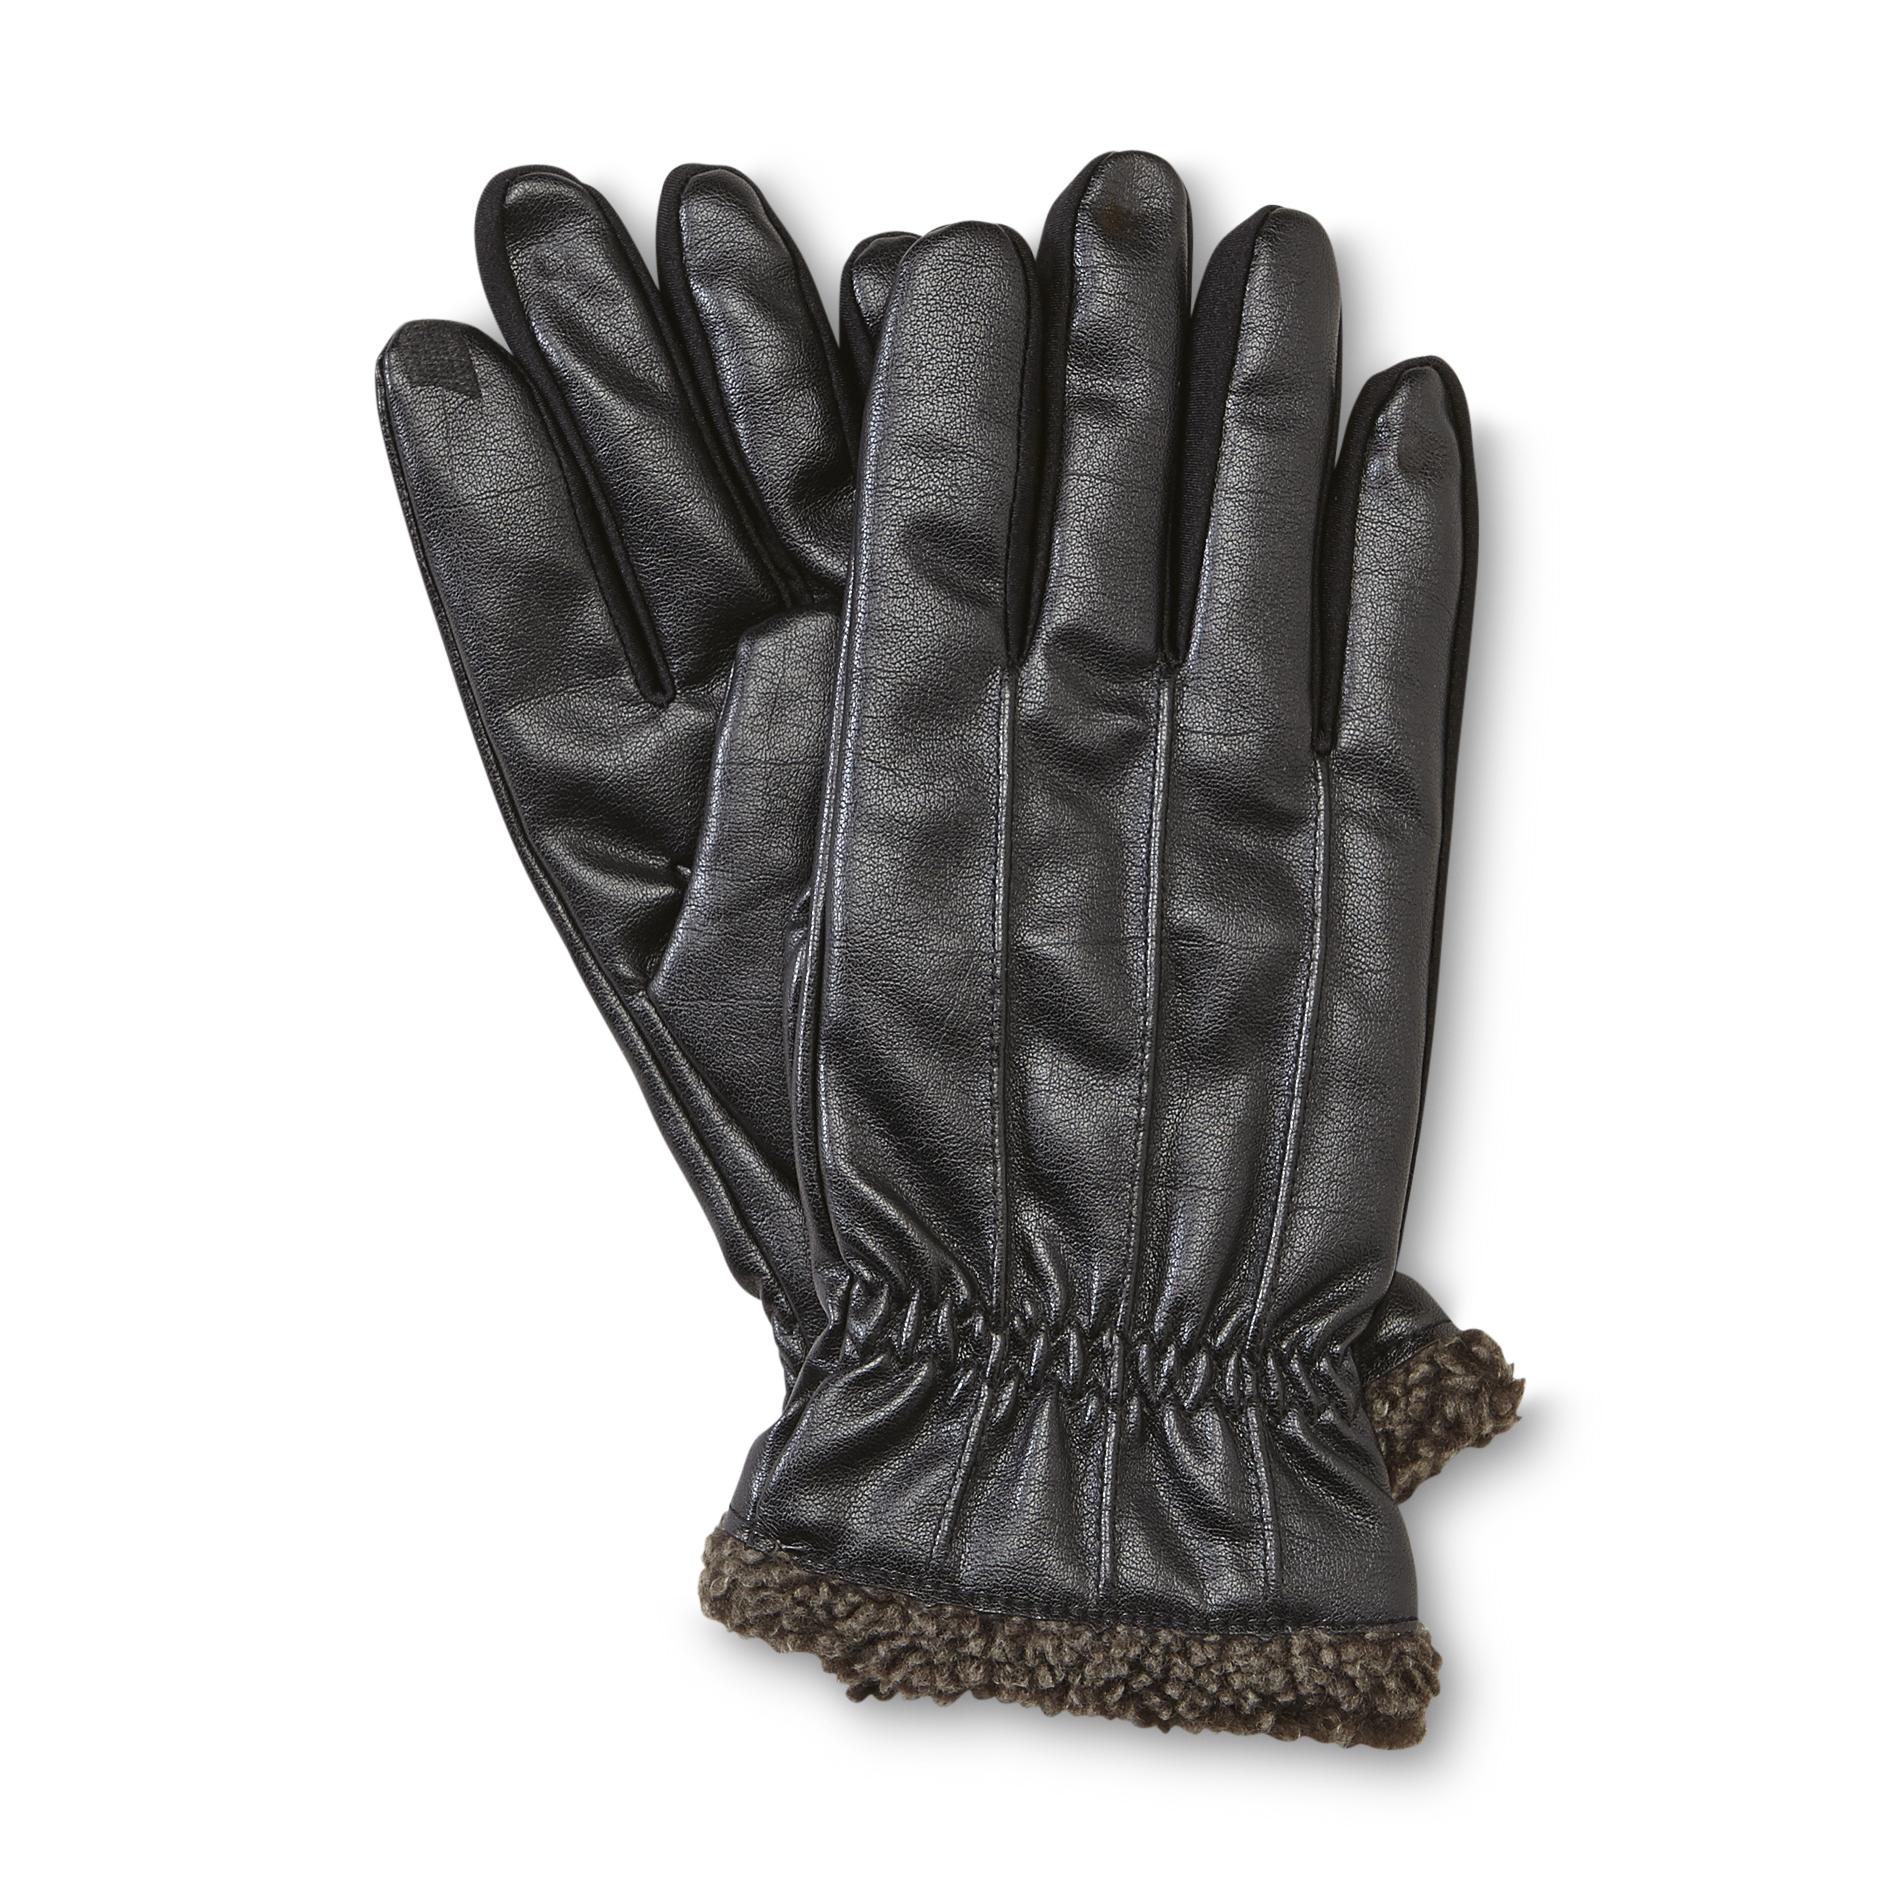 Isotoner Men's SmarTouch Faux Leather Tech Gloves - Fleece